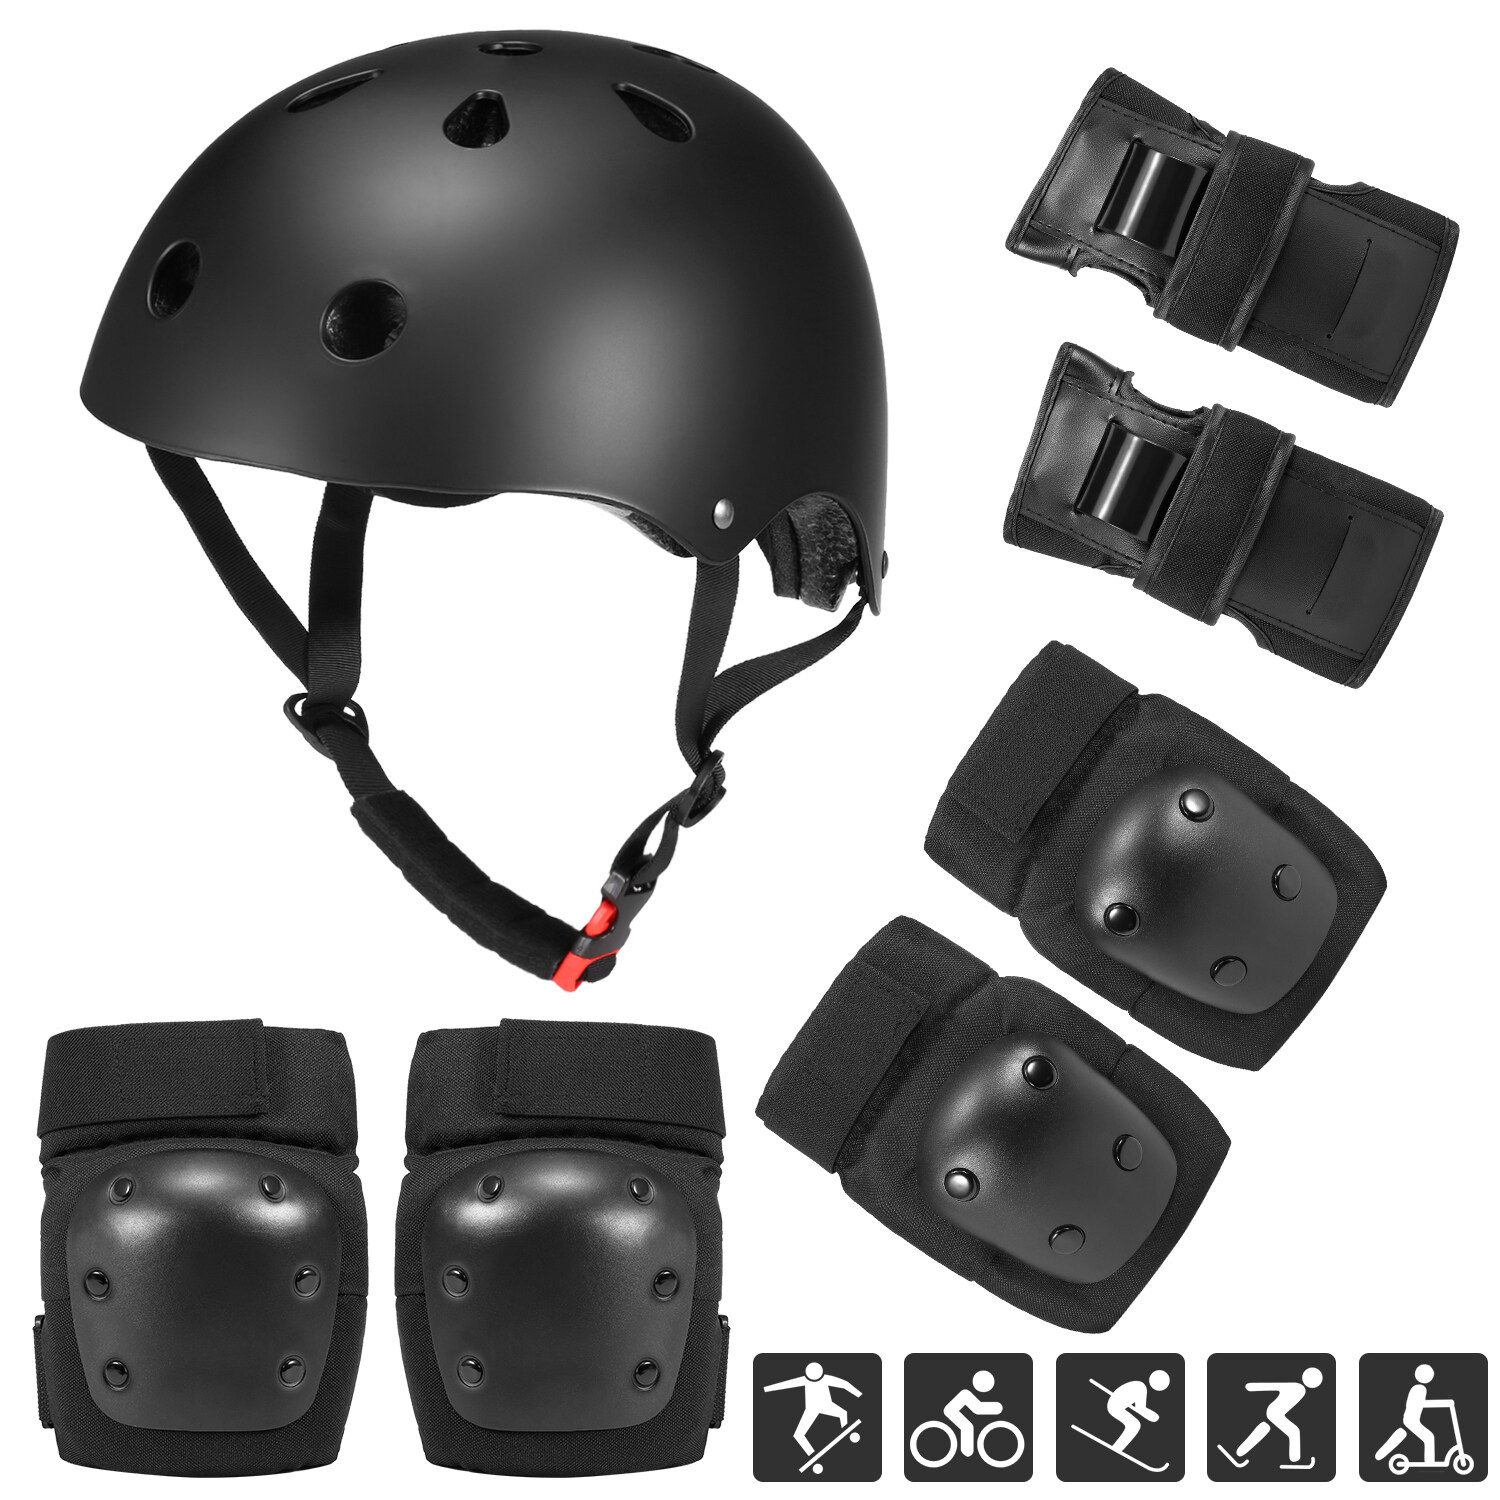 childrens helmet and pads set